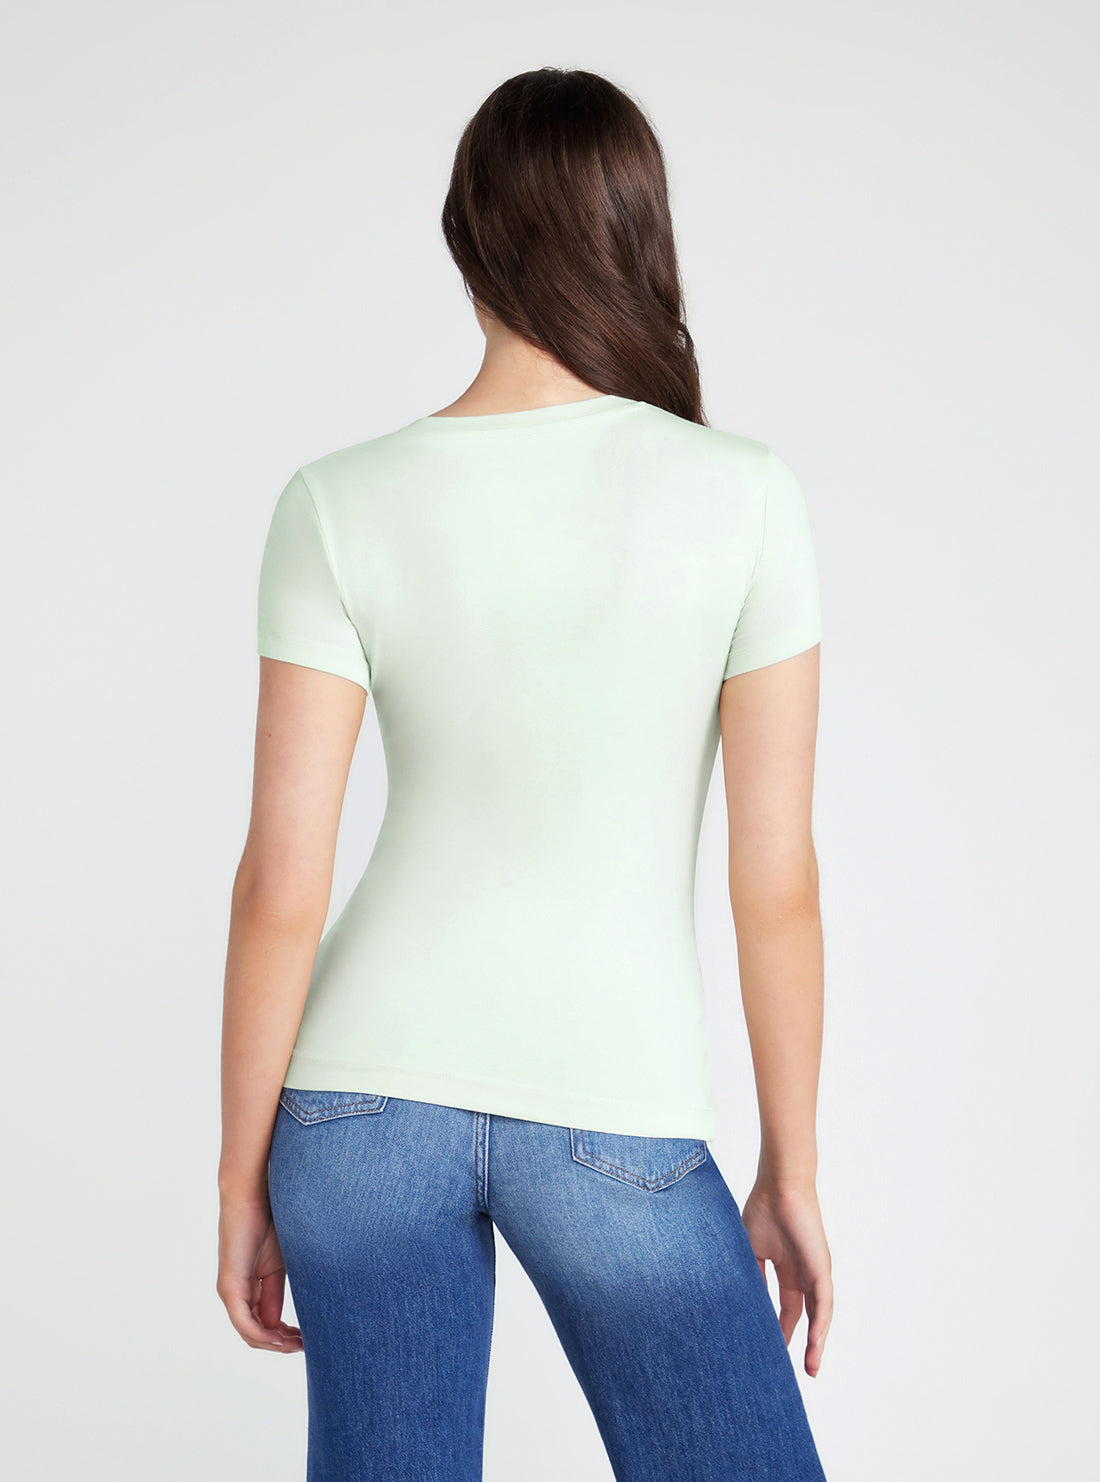 Mint Green Rhinestone Rose T-Shirt | GUESS Women's Apparel | Back view